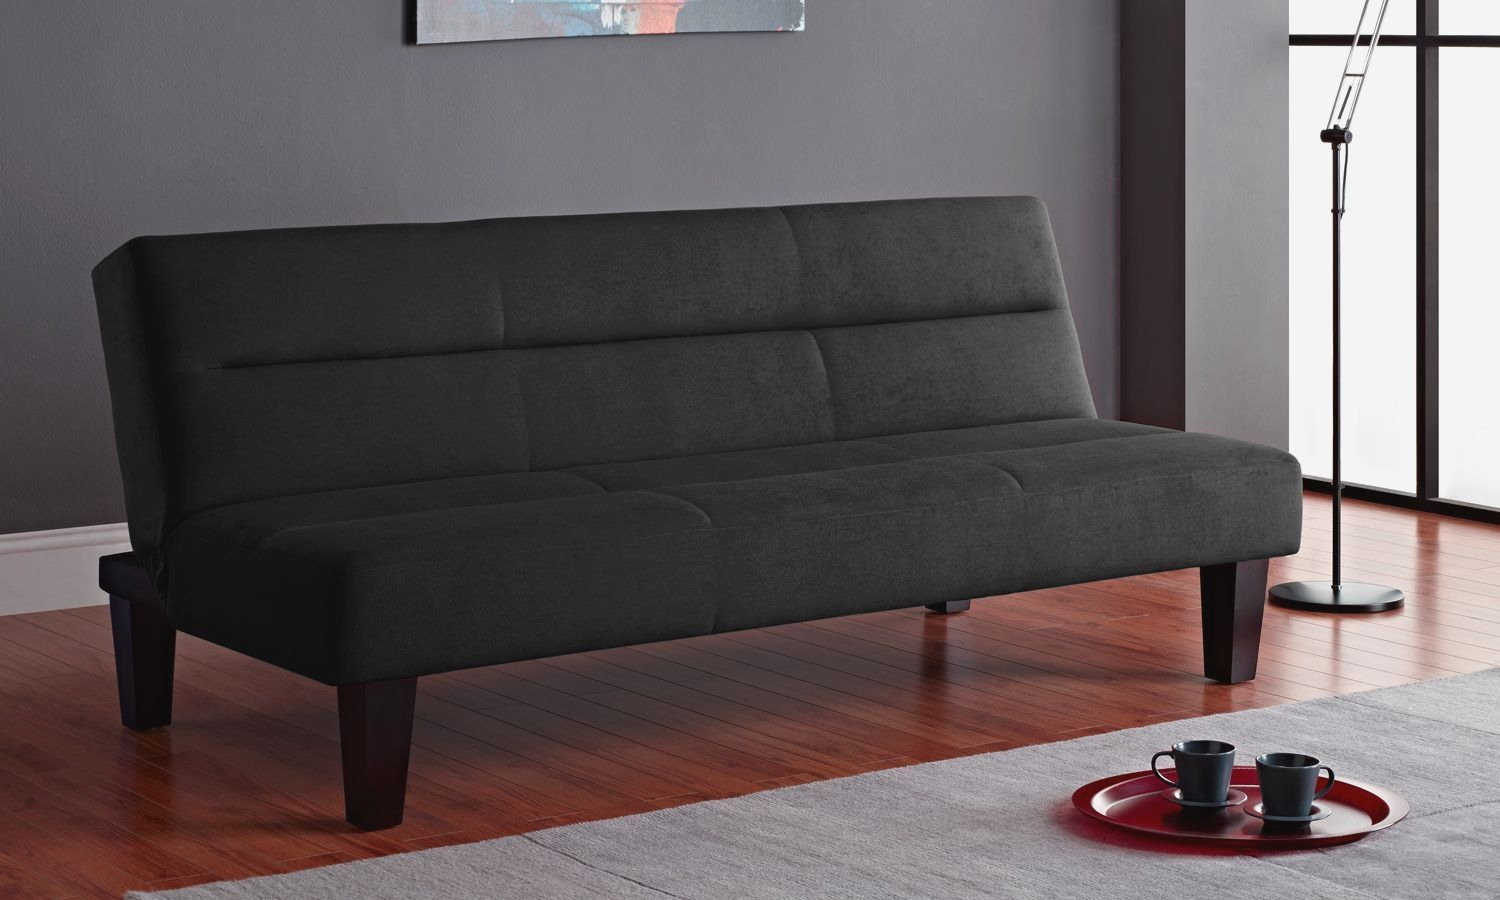 kmart sofa bed australia